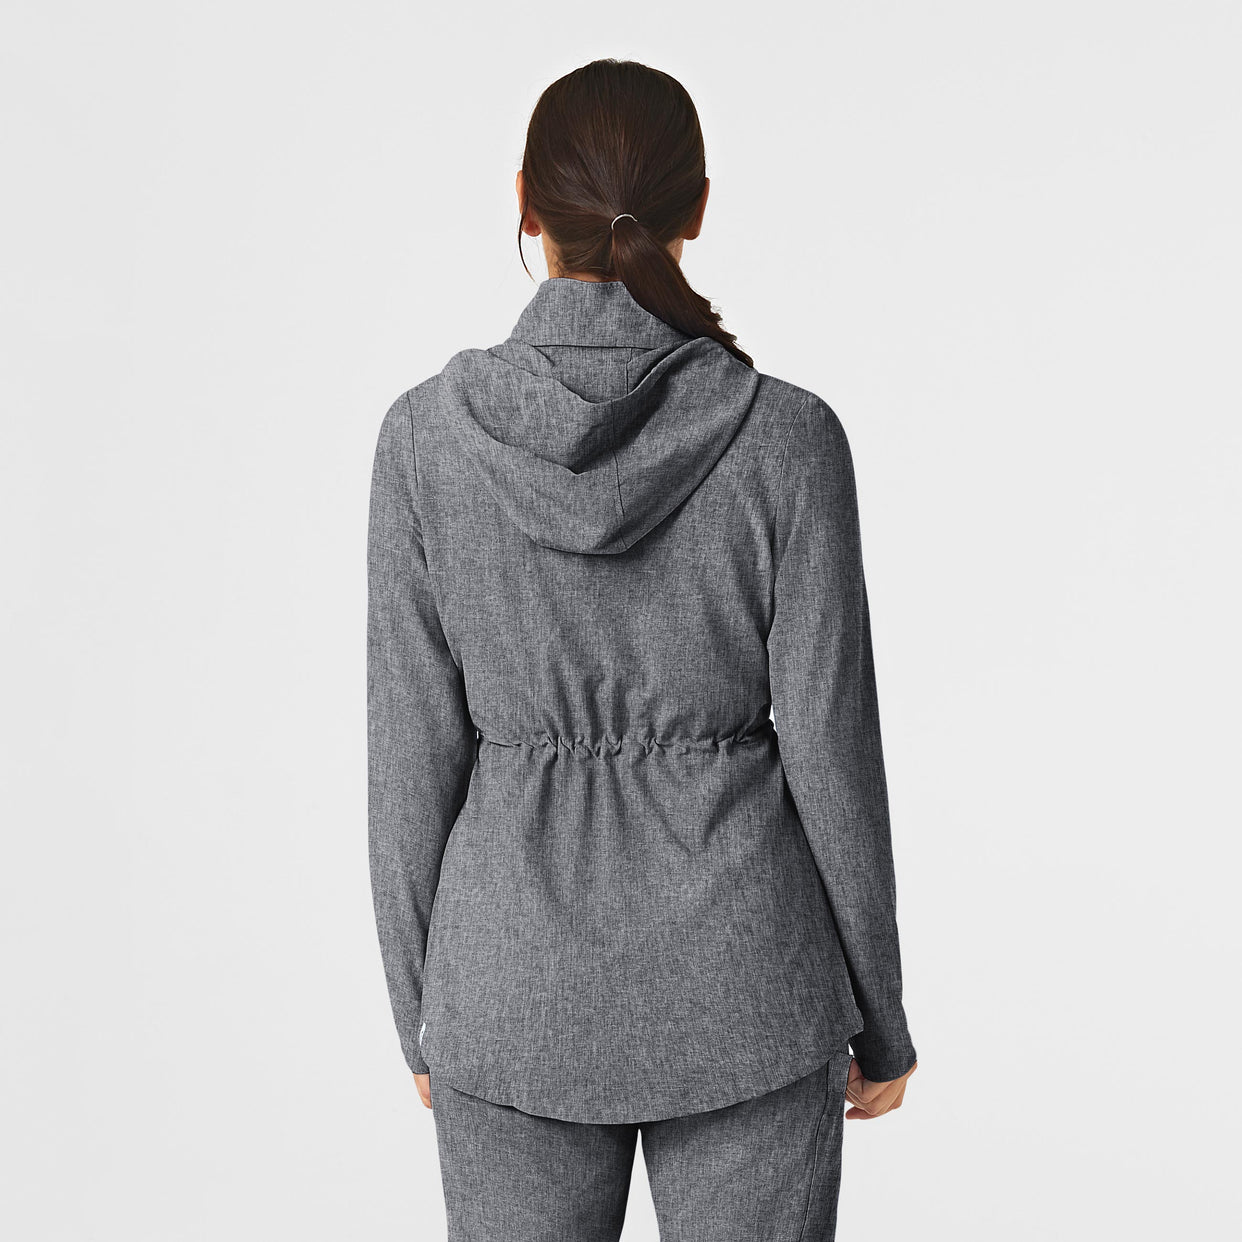 WonderWink RENEW Women's Convertible Hood Fashion Jacket - Grey Heather